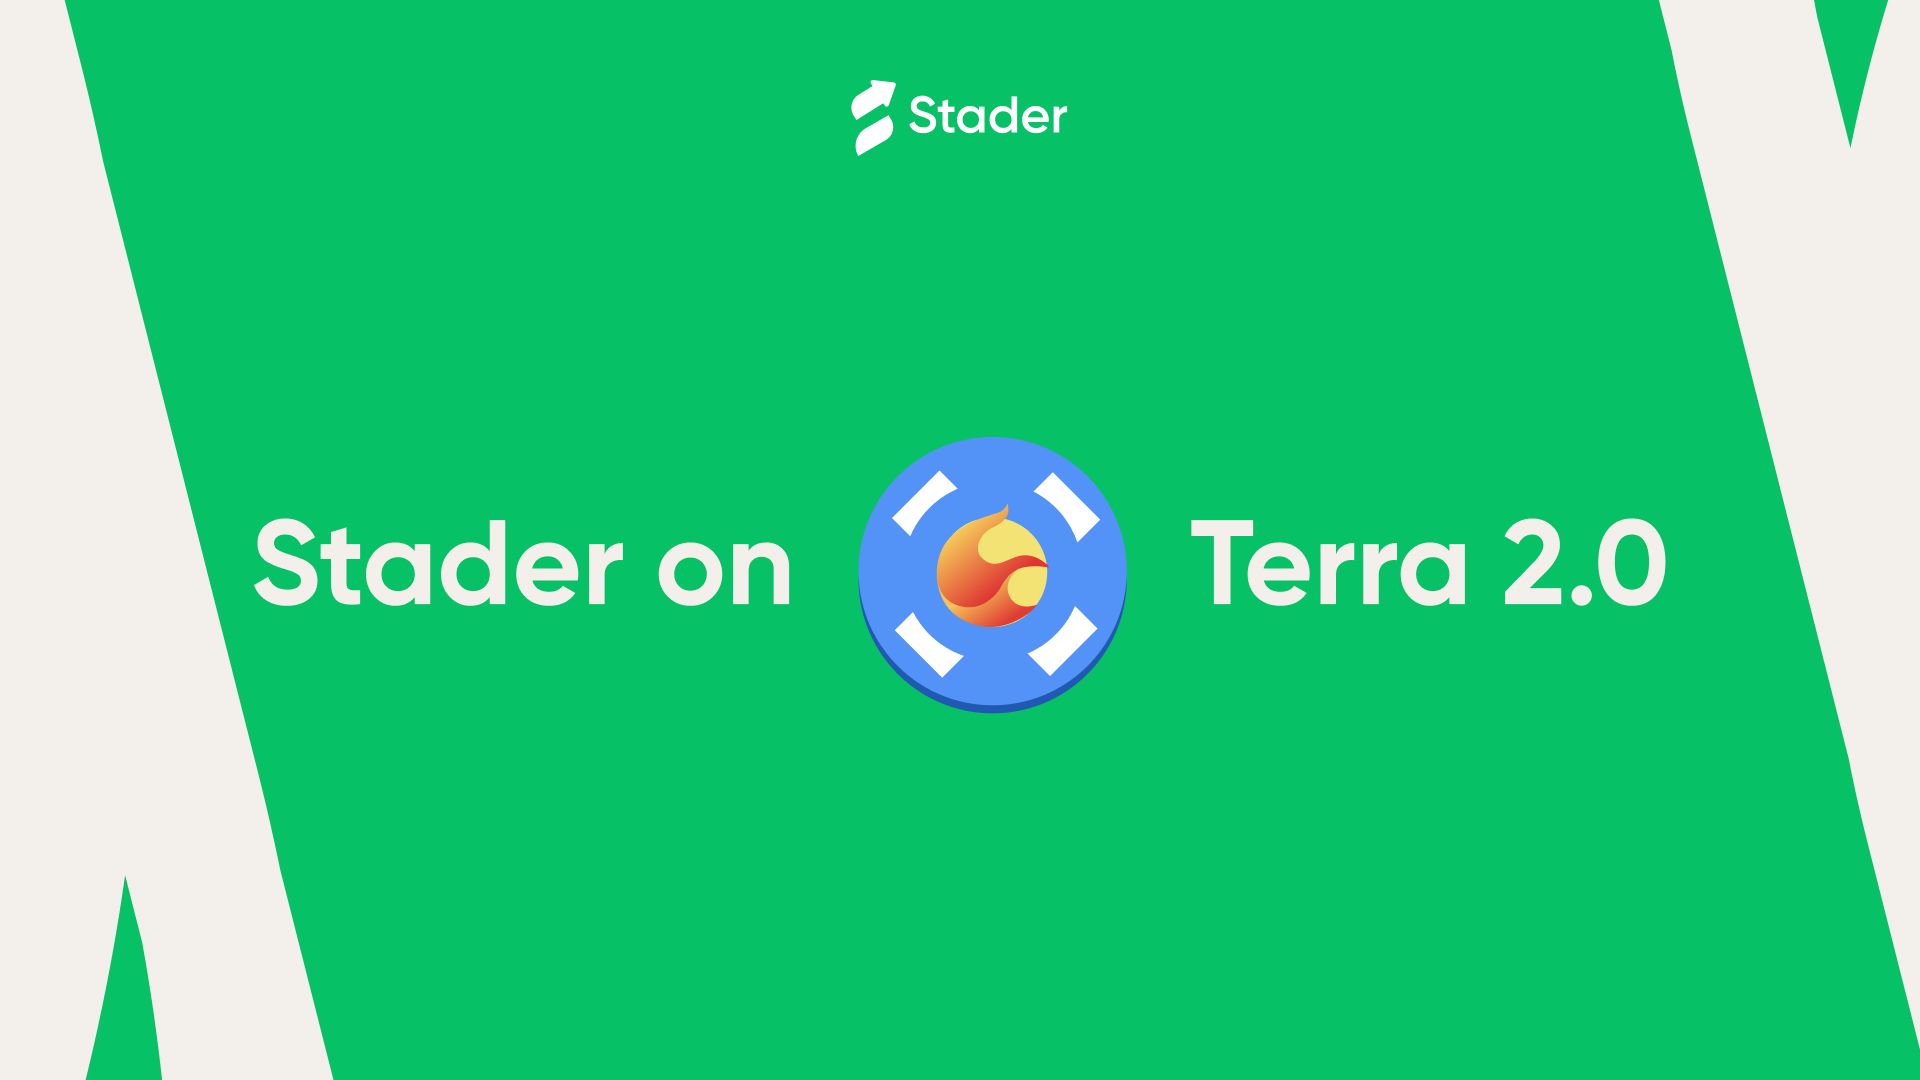 Stader on Terra 2.0